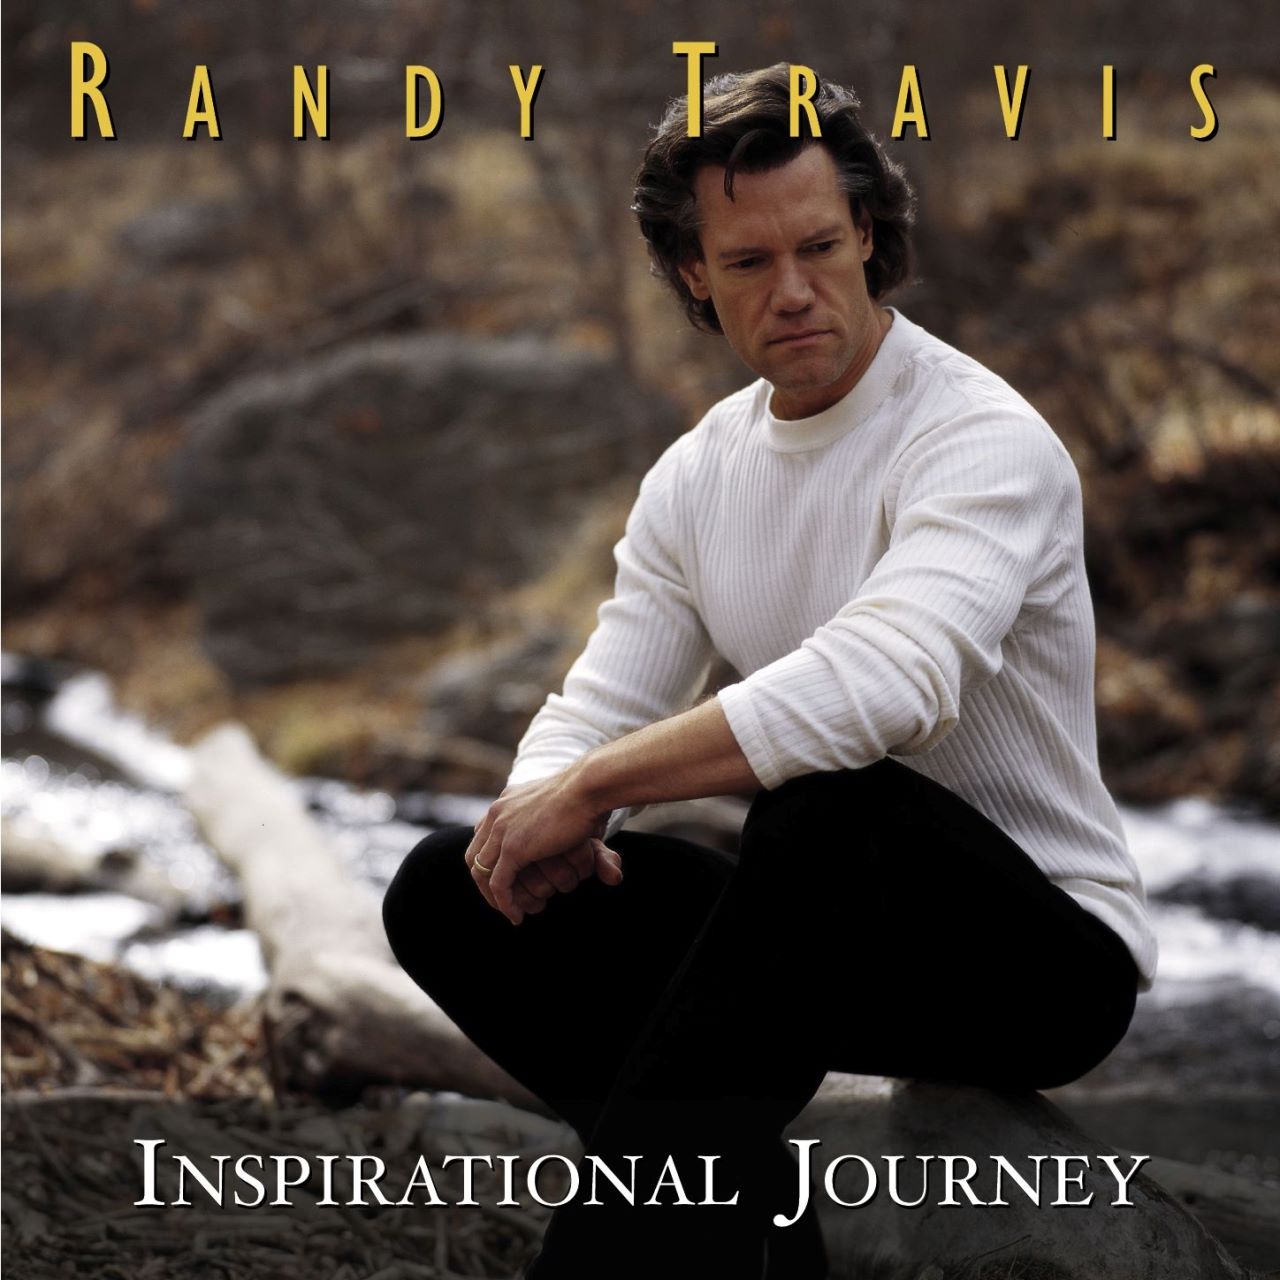 Randy Travis – Inspirational Journey cover album